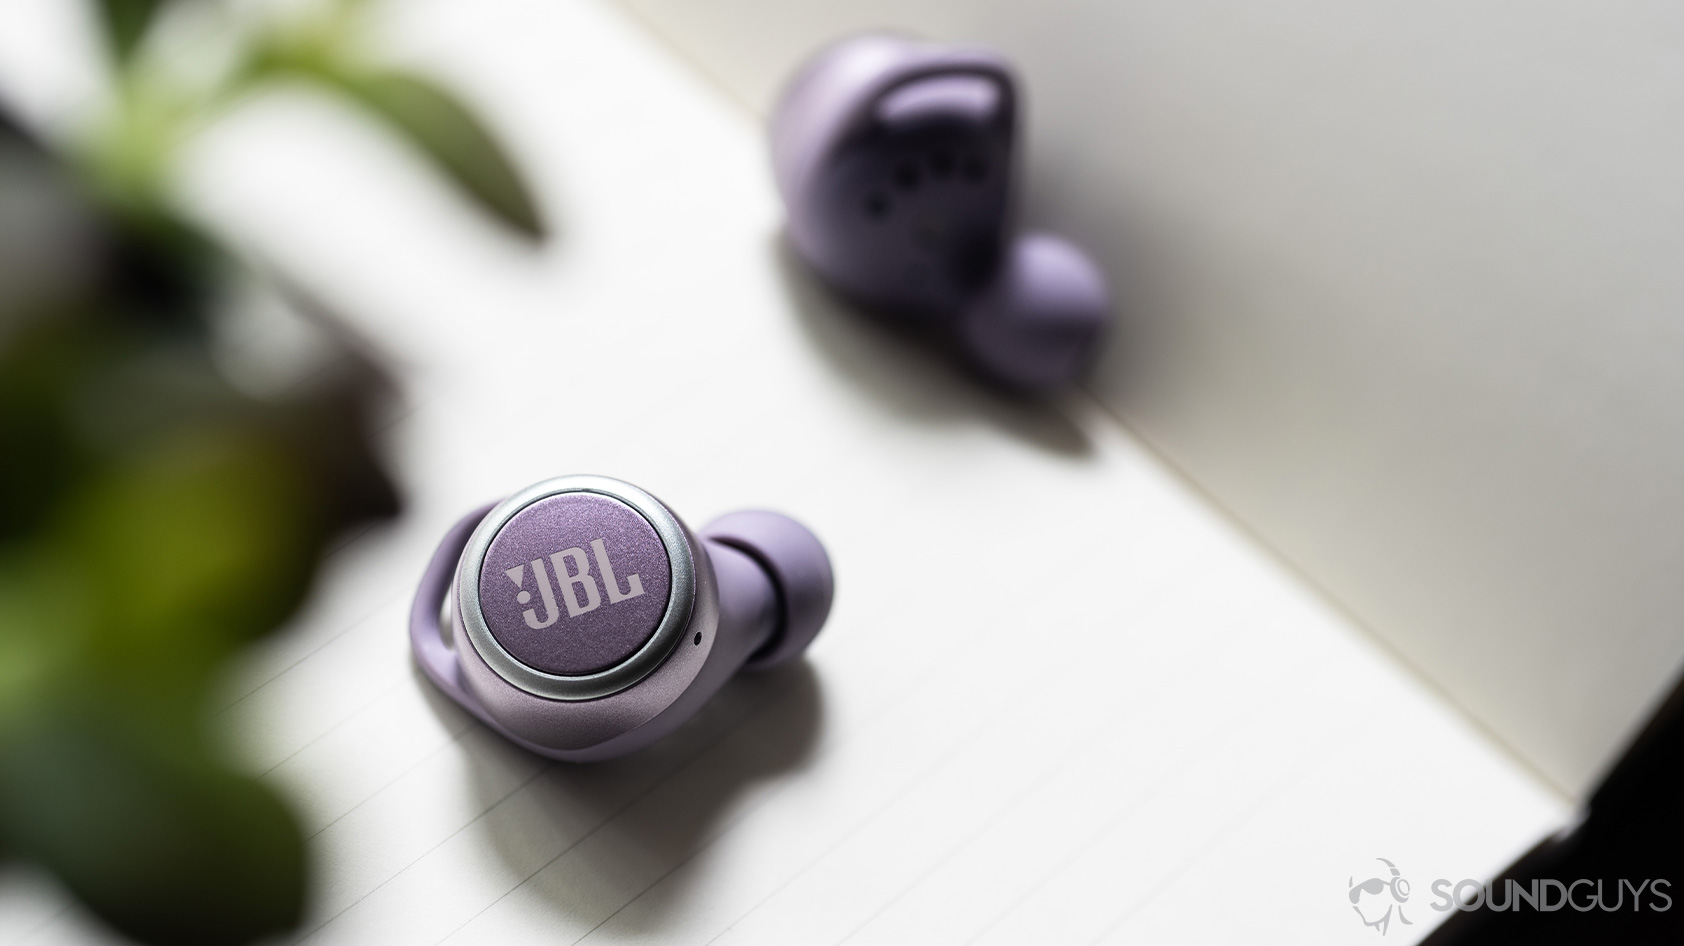 The JBL LIVE 300 TWS true wireless earbuds on a notebook.